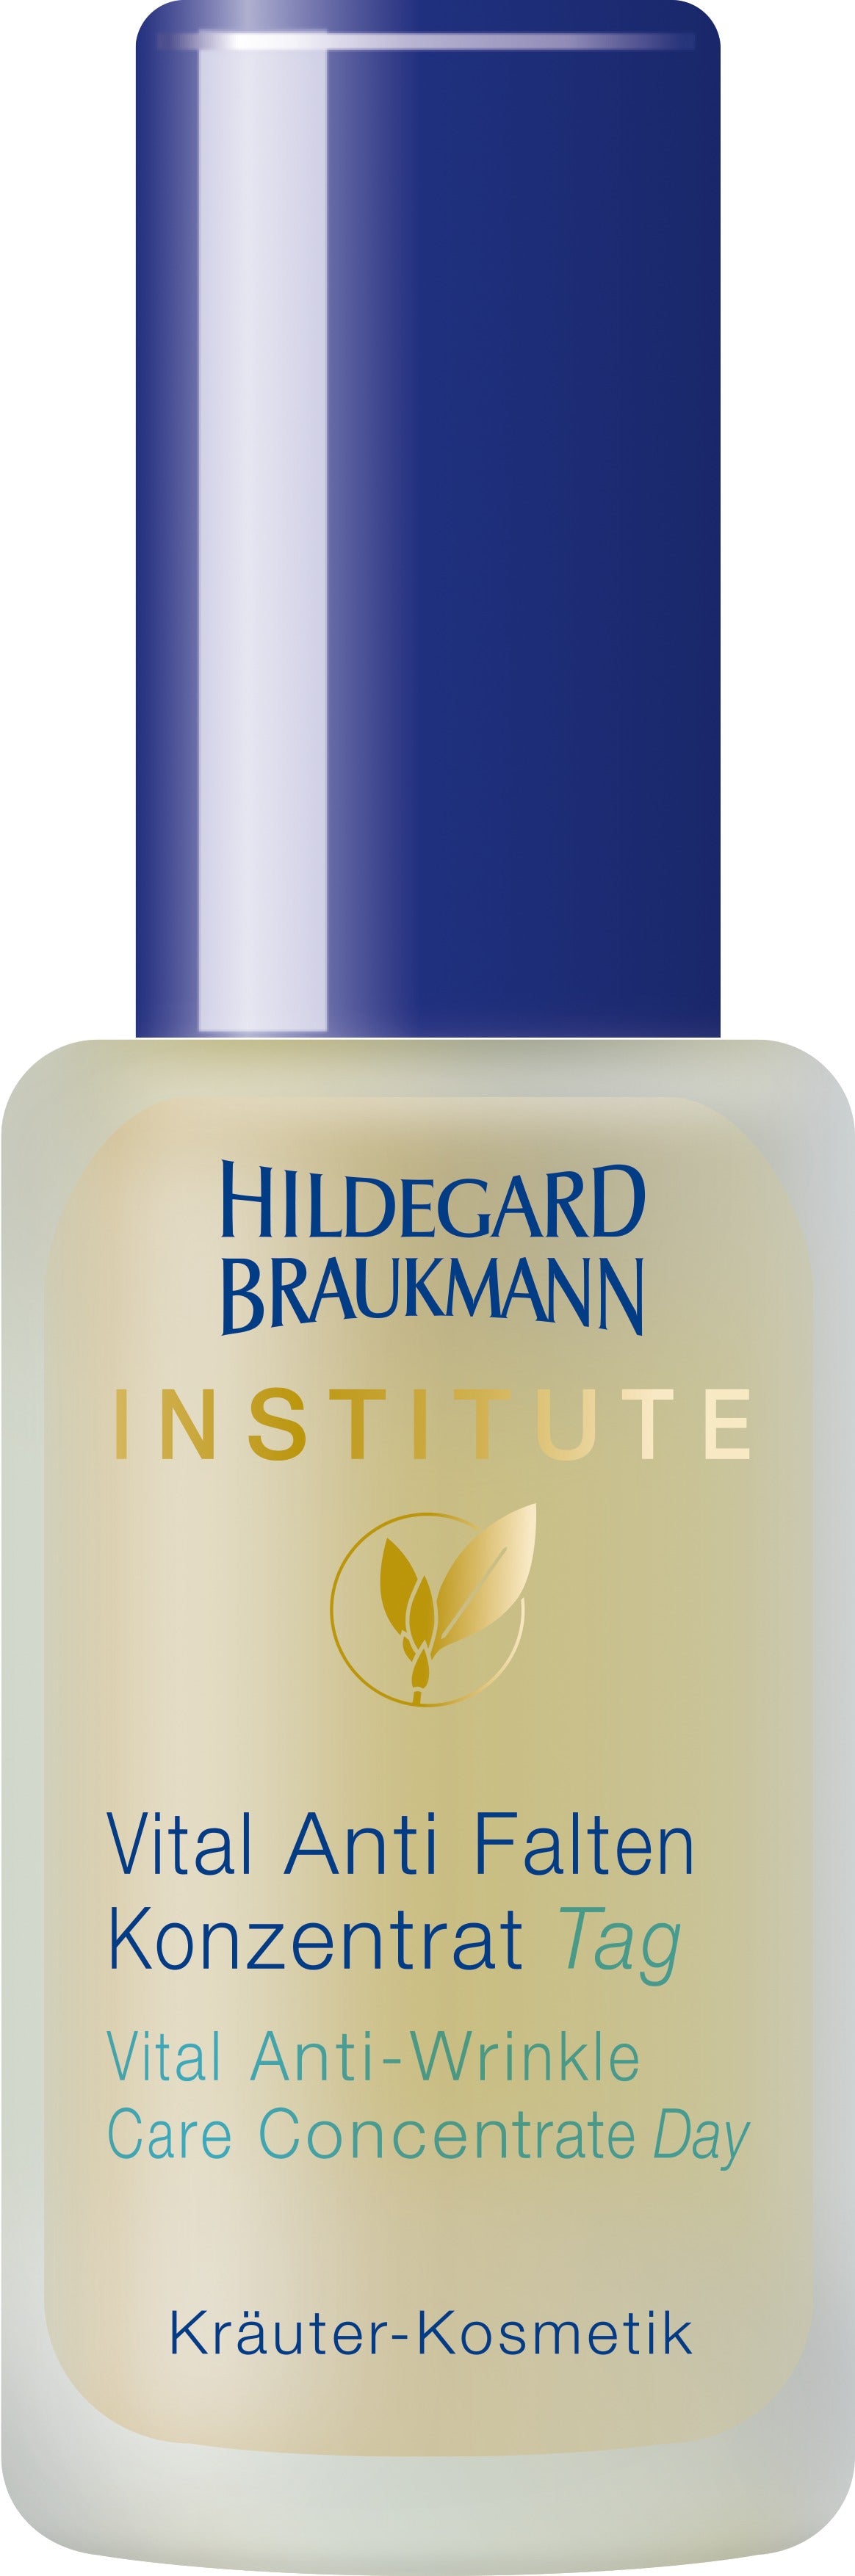 Hildegard Braukmann Institute Vital Anti Falten Konzentrat Tag (30ml)